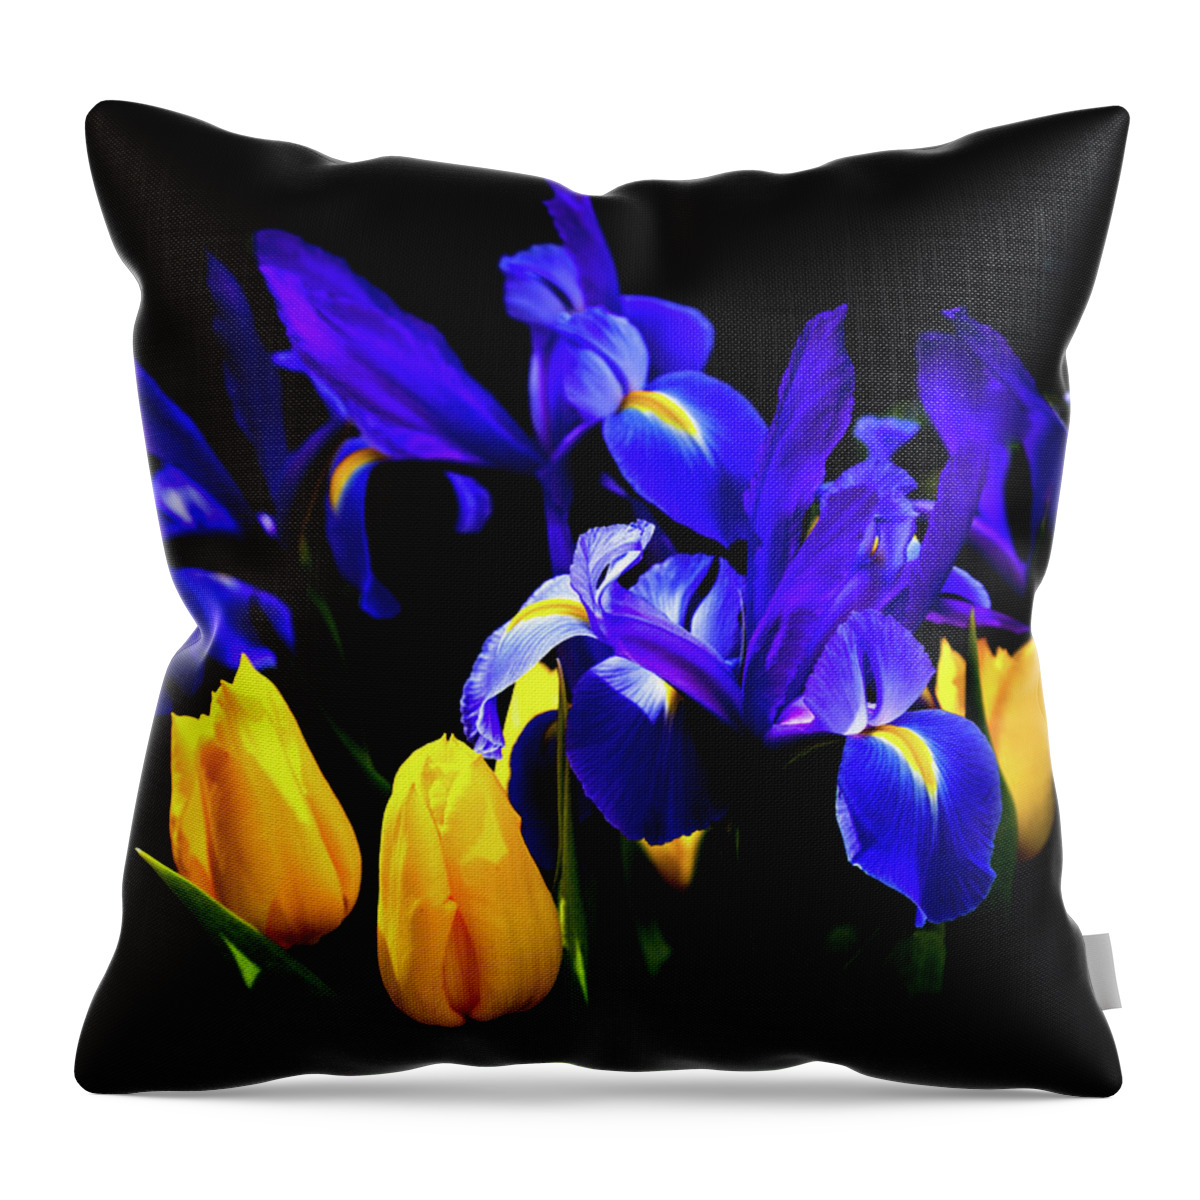 Blue Iris Throw Pillow featuring the photograph BLUE IRIS WALTZ by KAREN WILES by Karen Wiles